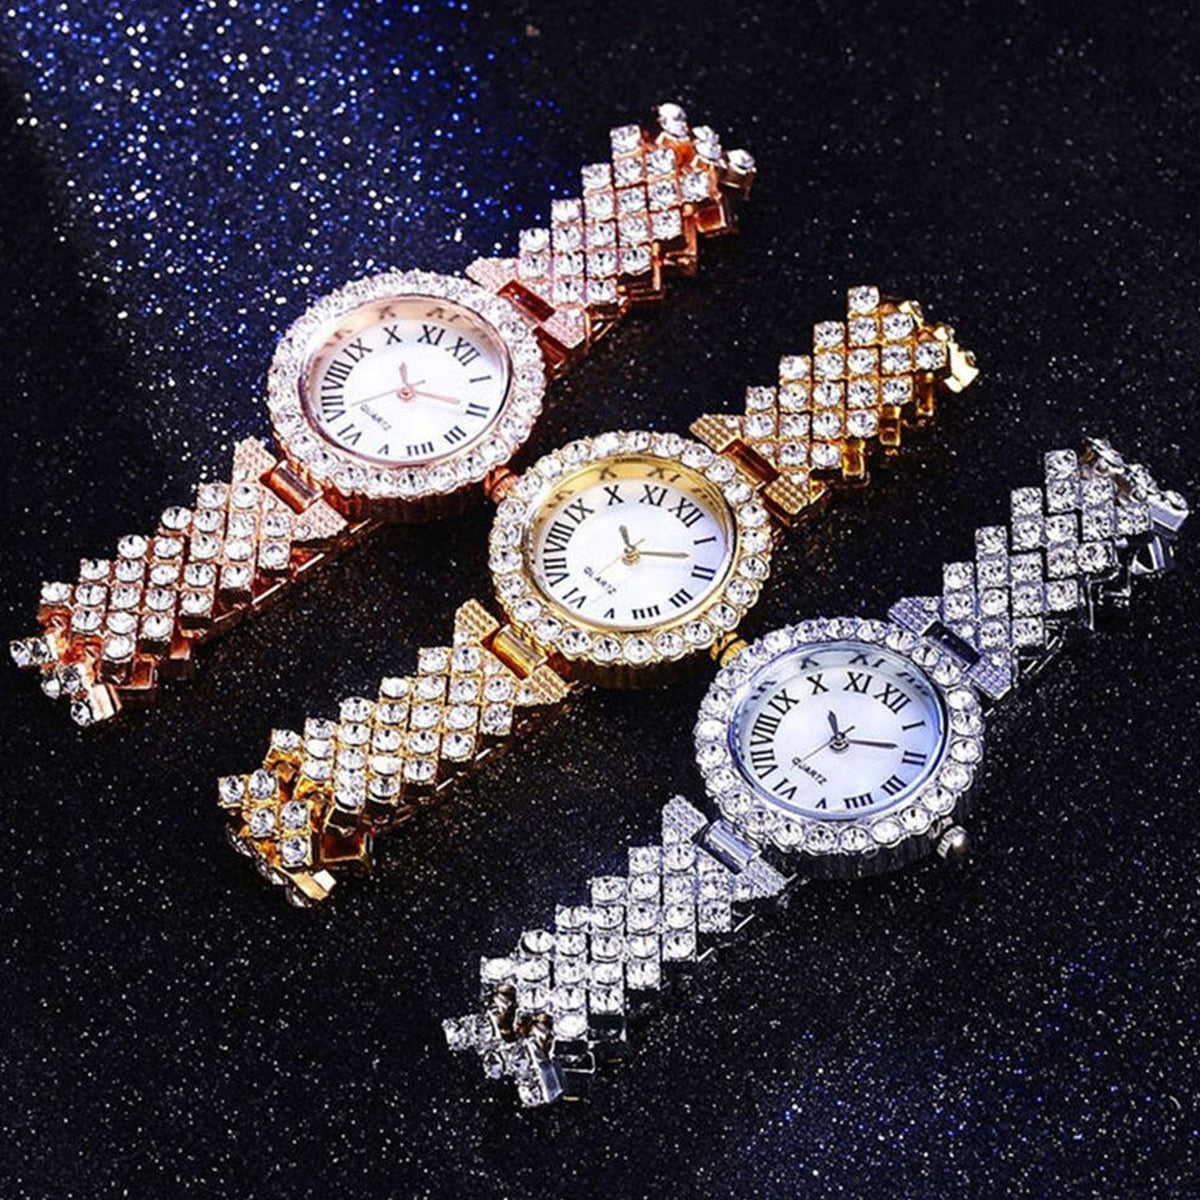 Luxury Watch Luxury Brand Reloj Mujer Watch Bracelet Set